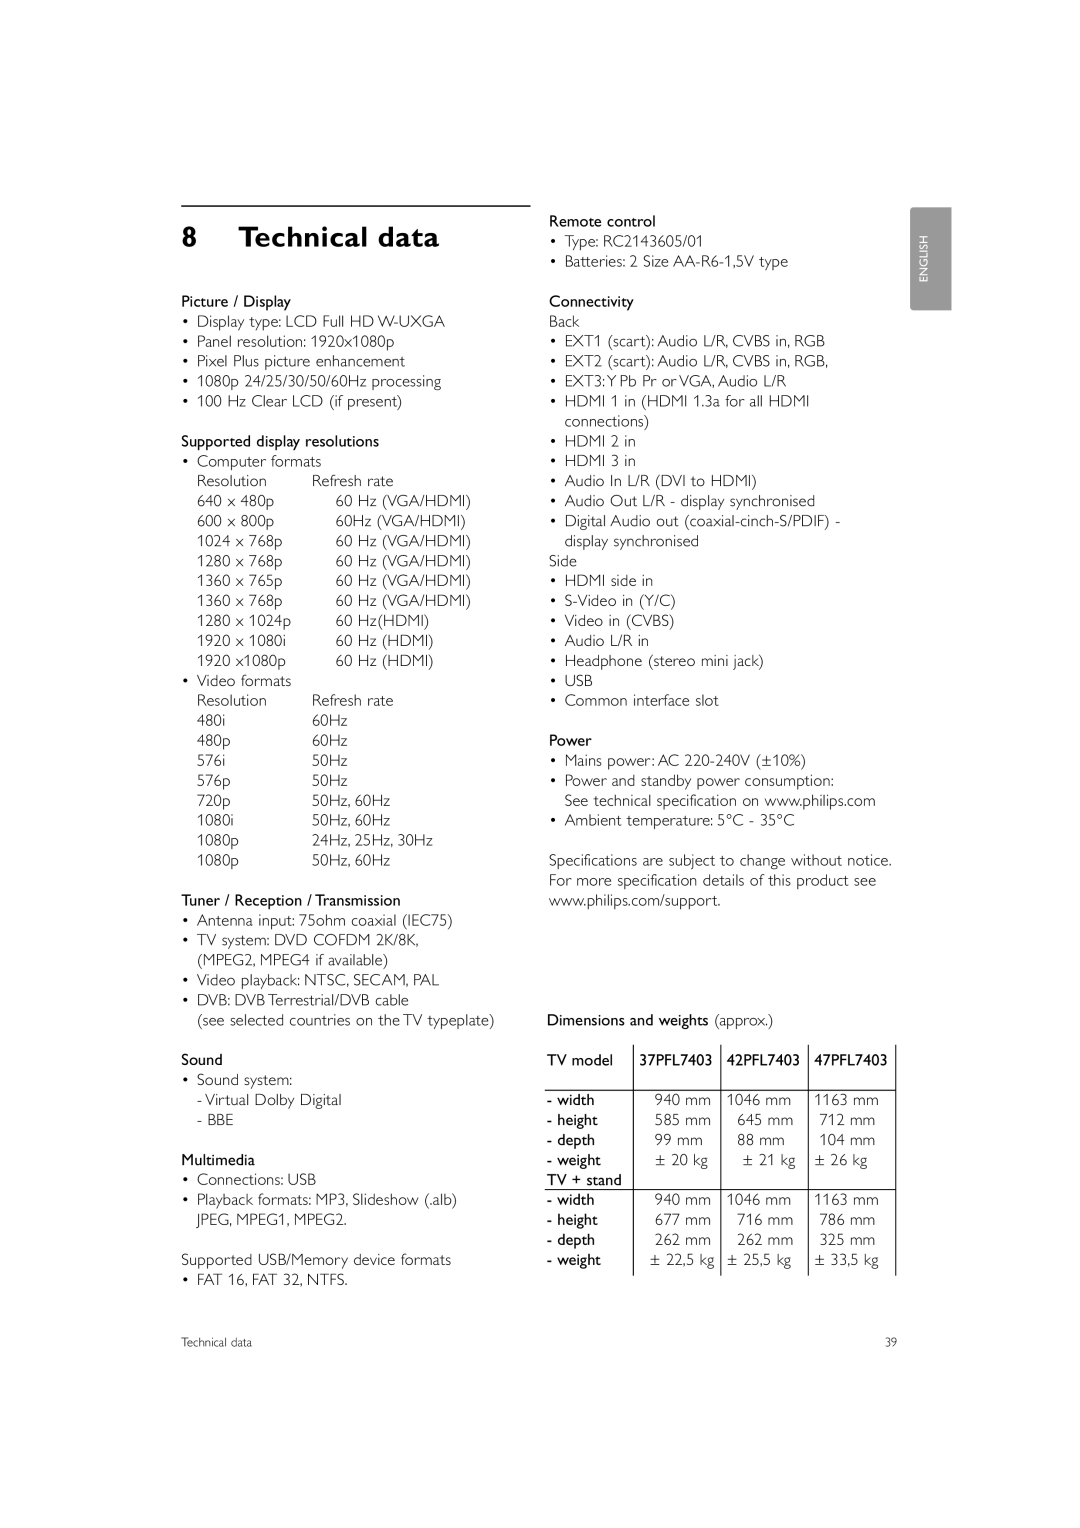 Philips 37PFL7403 manual Technical data 